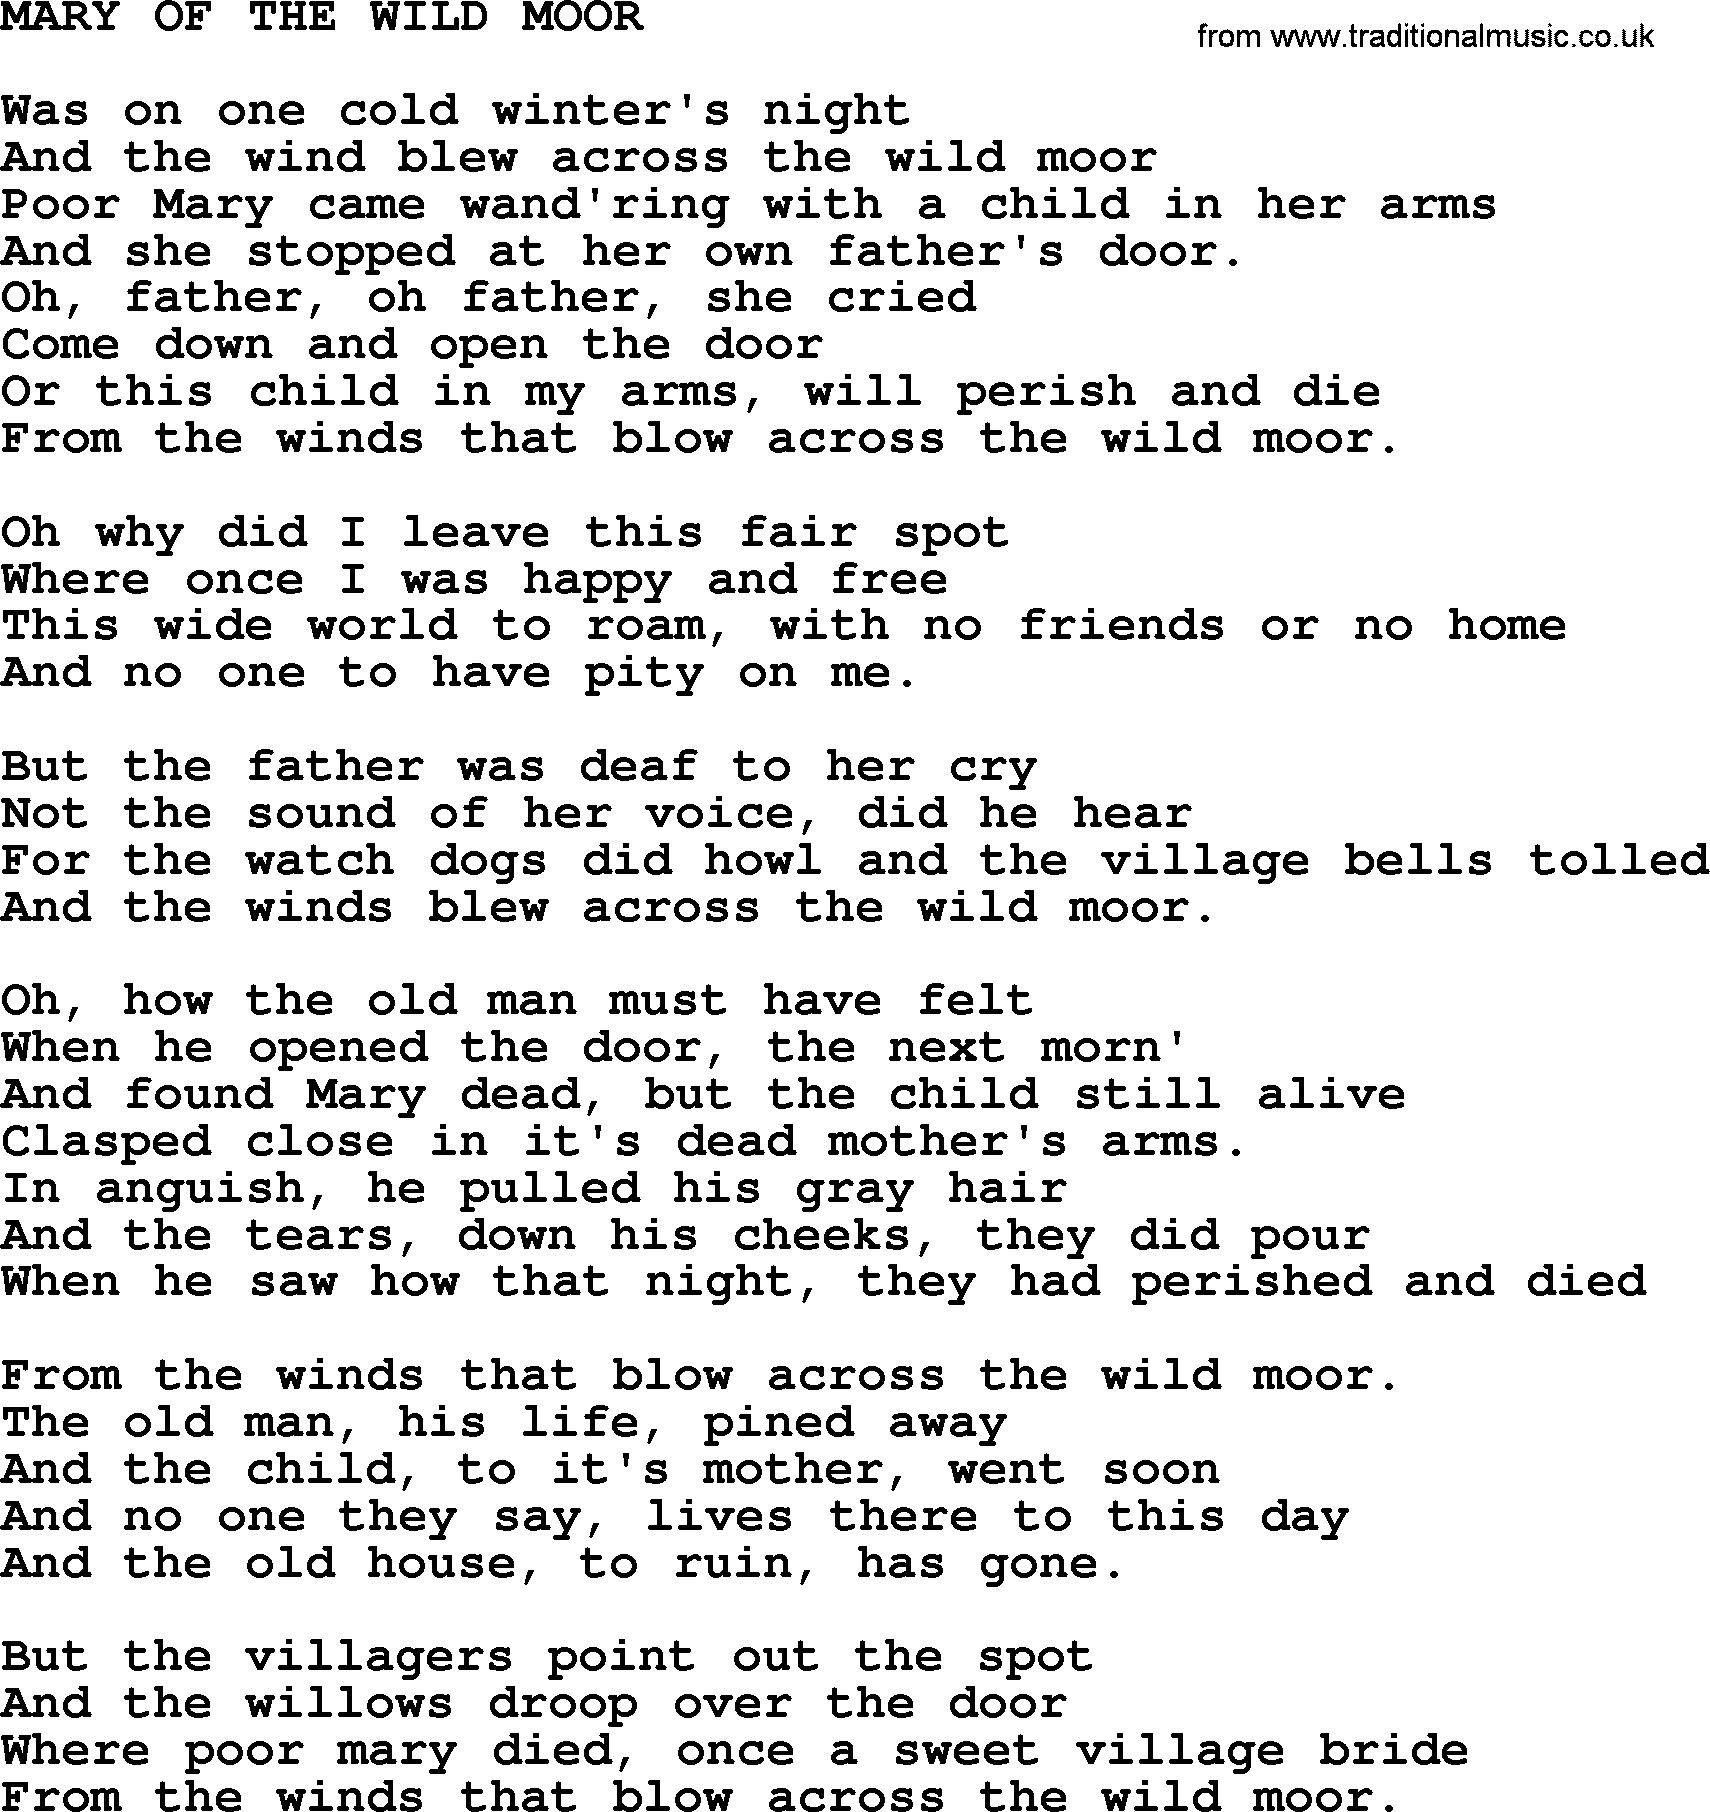 Johnny Cash song Mary Of The Wild Moor.txt lyrics